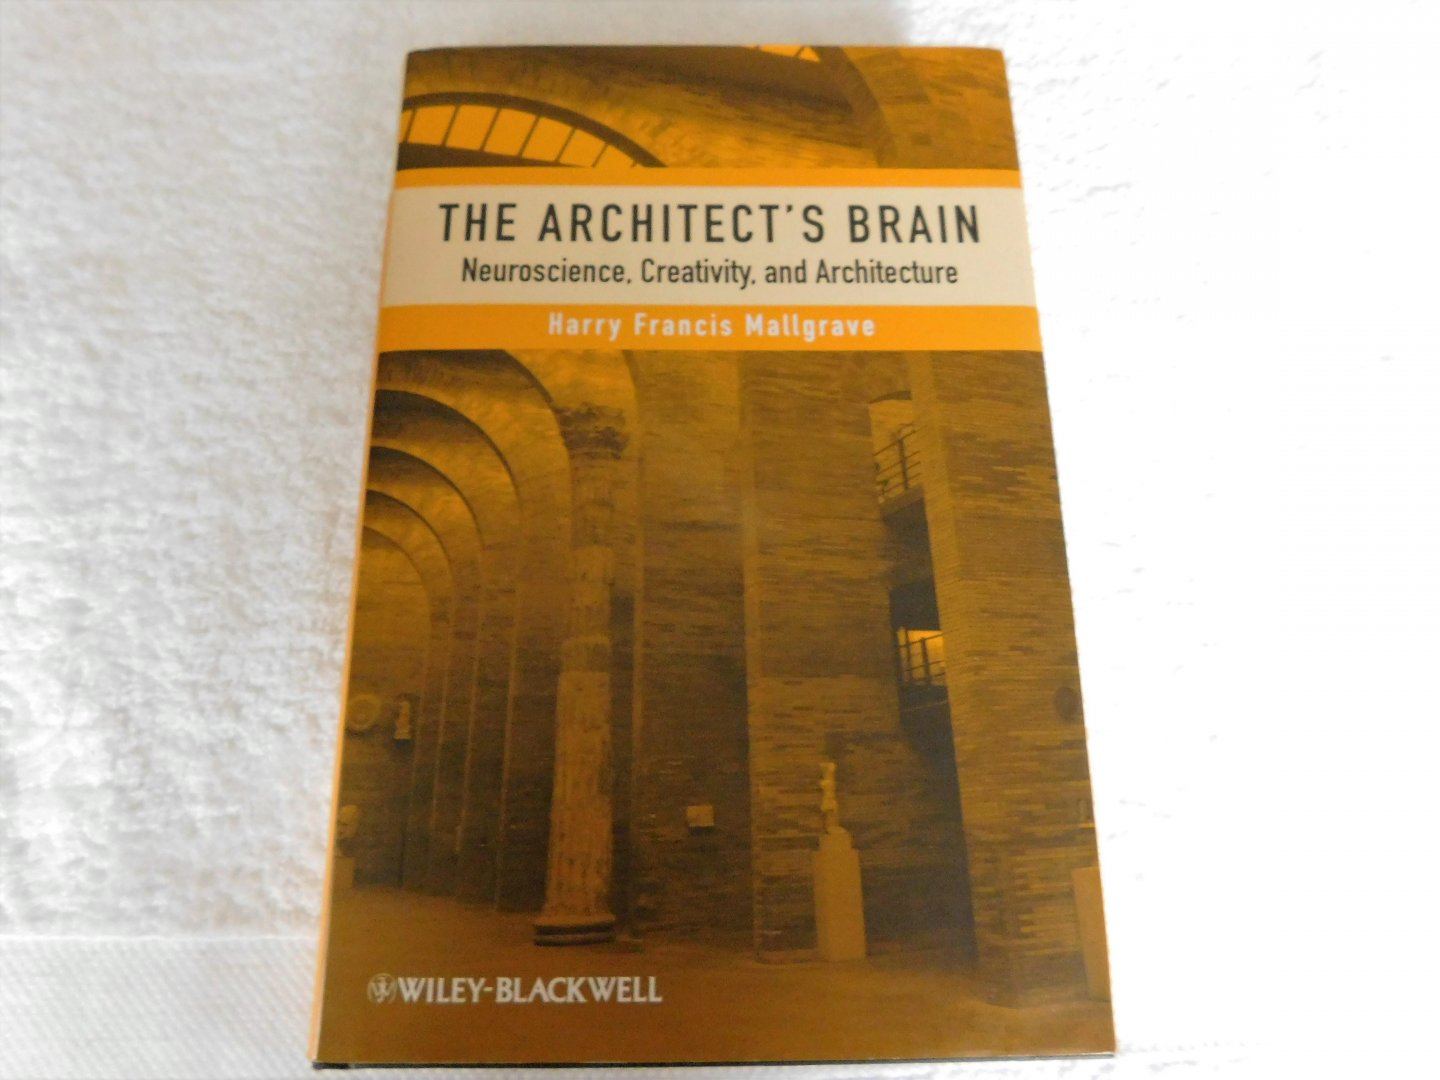 Mallgrave, Harry Francis - The Architect's Brain / Neuroscience, Creativity, and Architecture